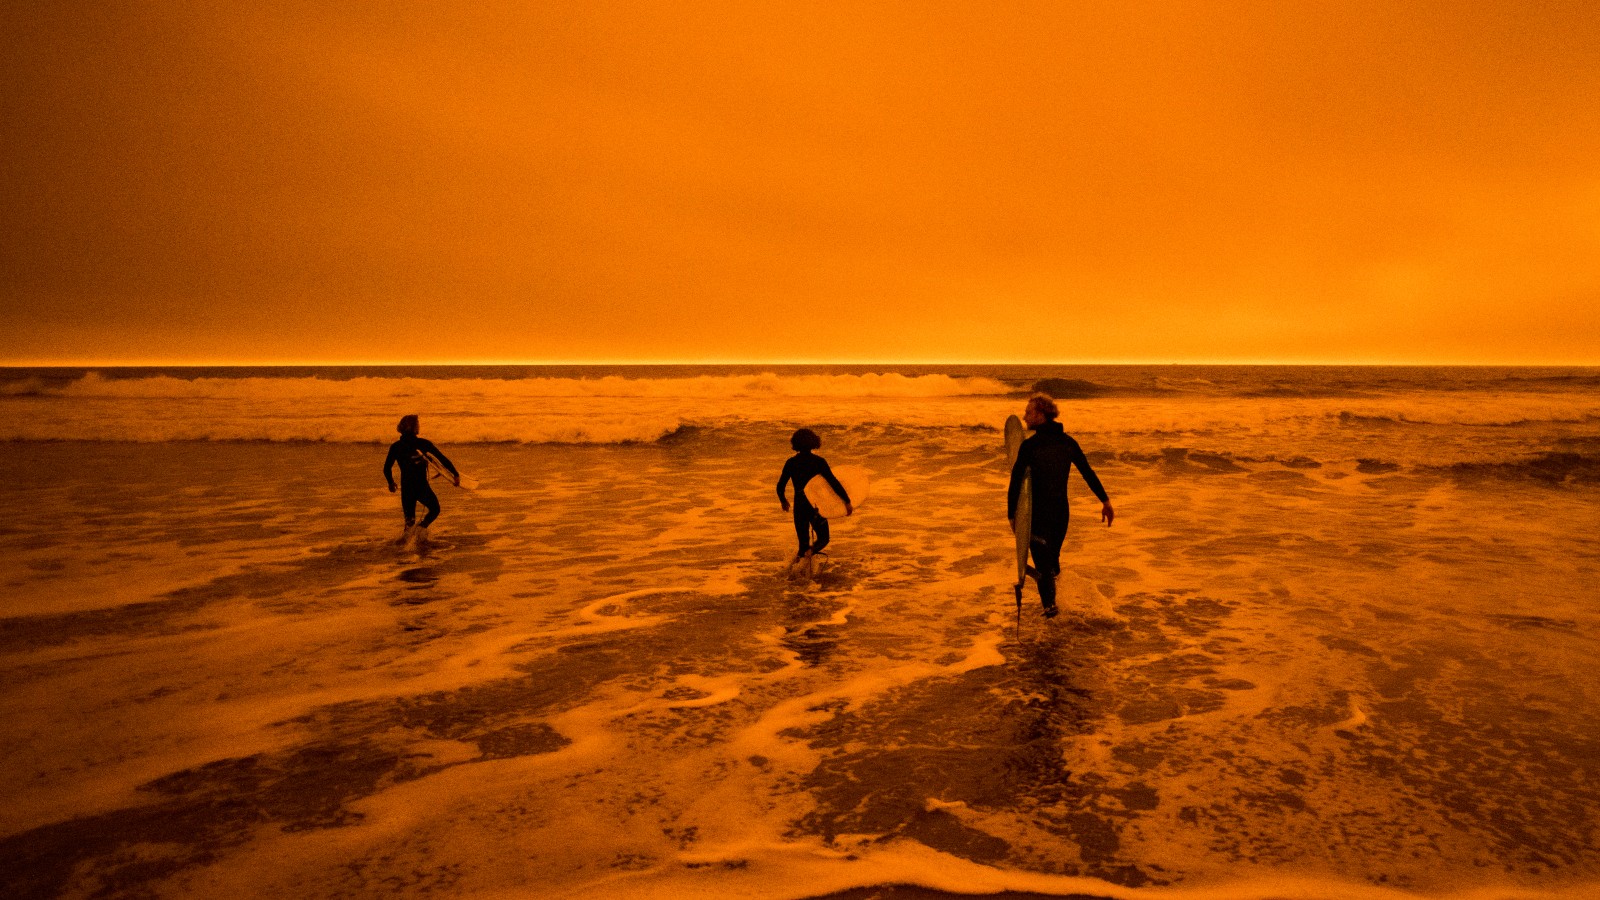 Children play in the ocean under an orange sky.